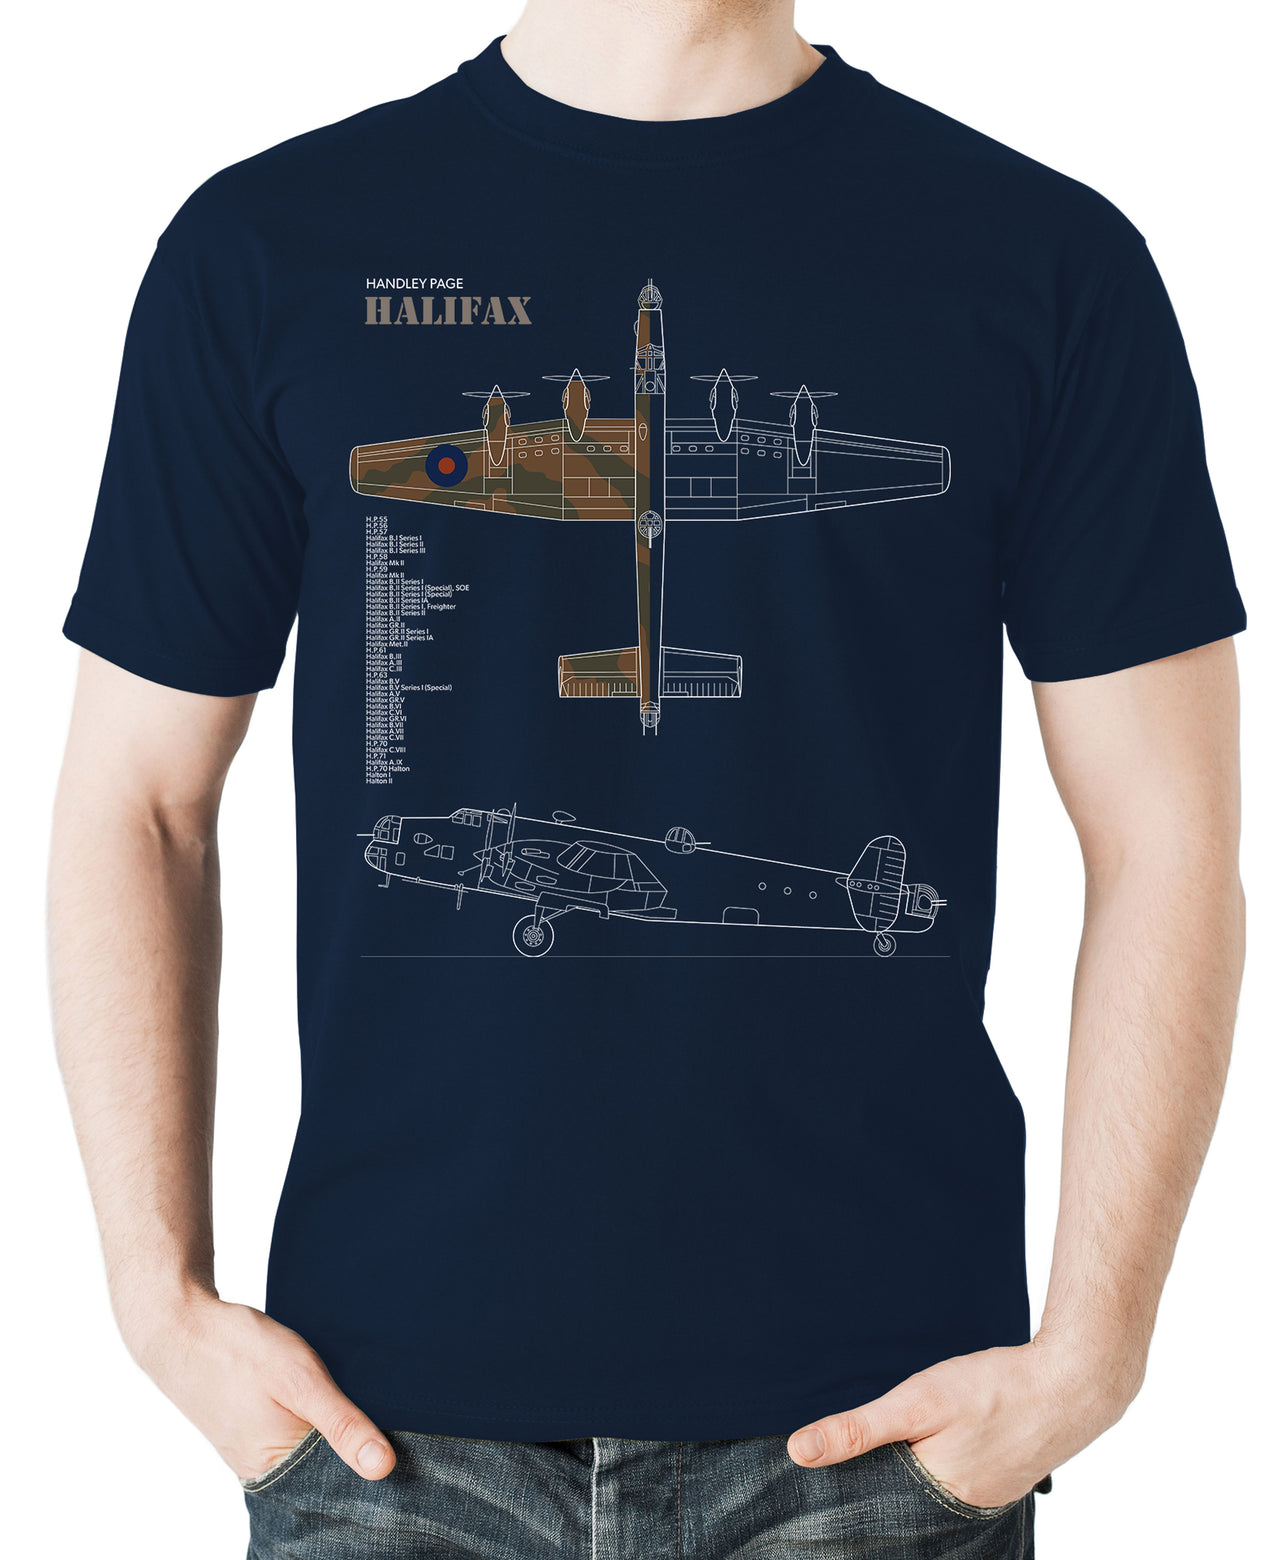 Halifax - T-shirt